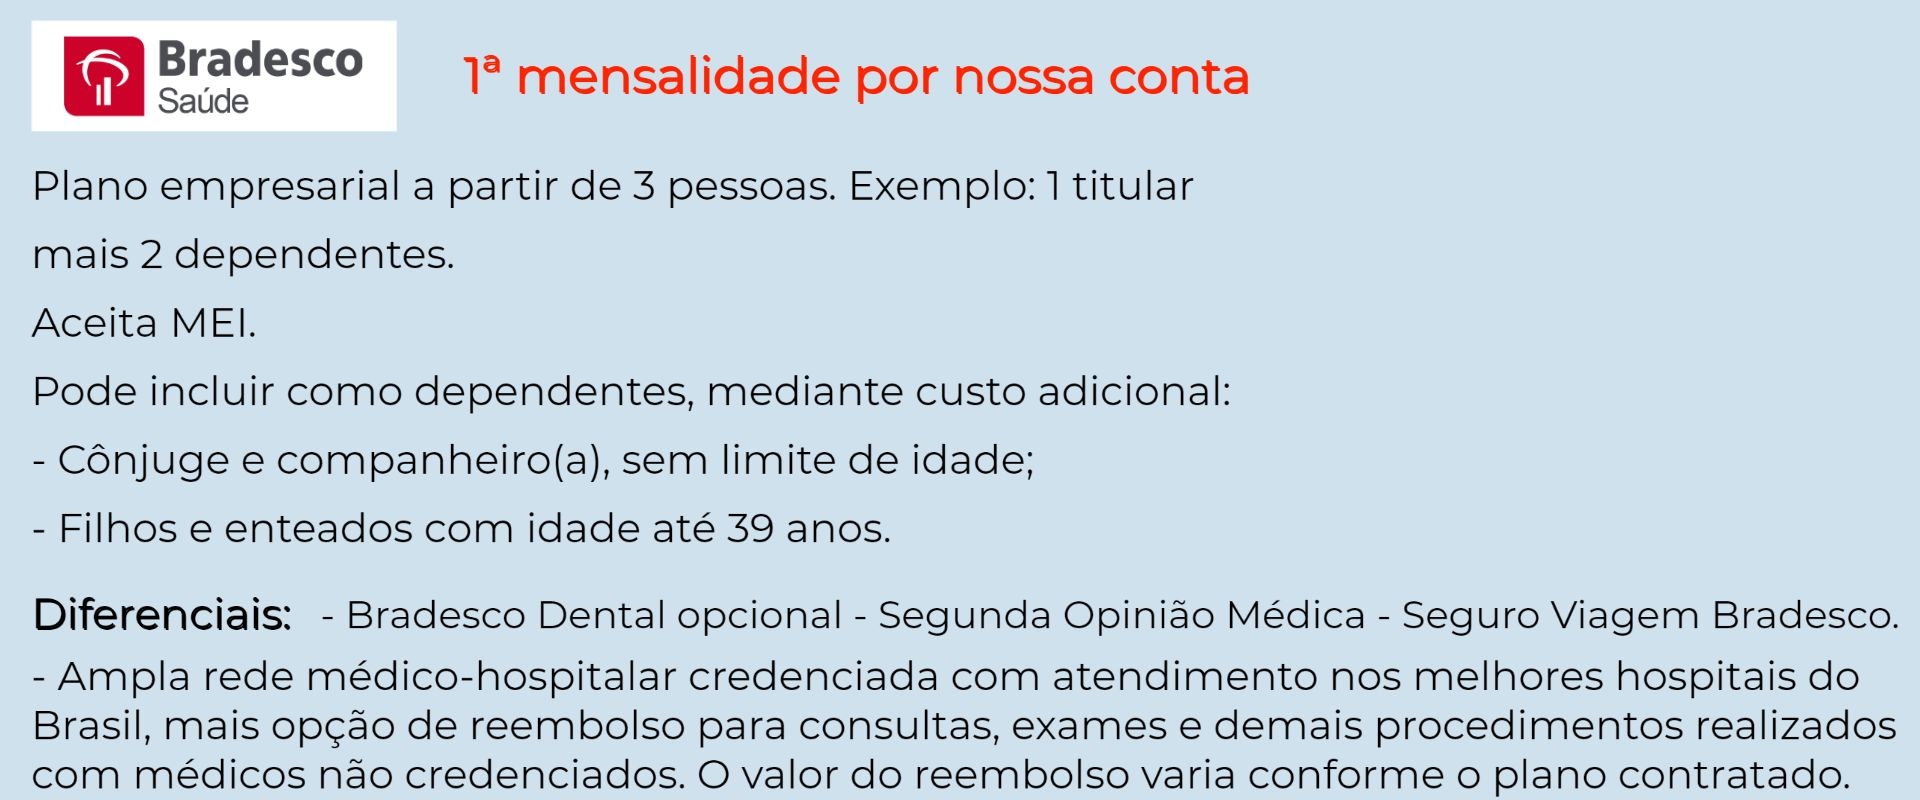 Bradesco Saúde Empresarial - Domingos Martins